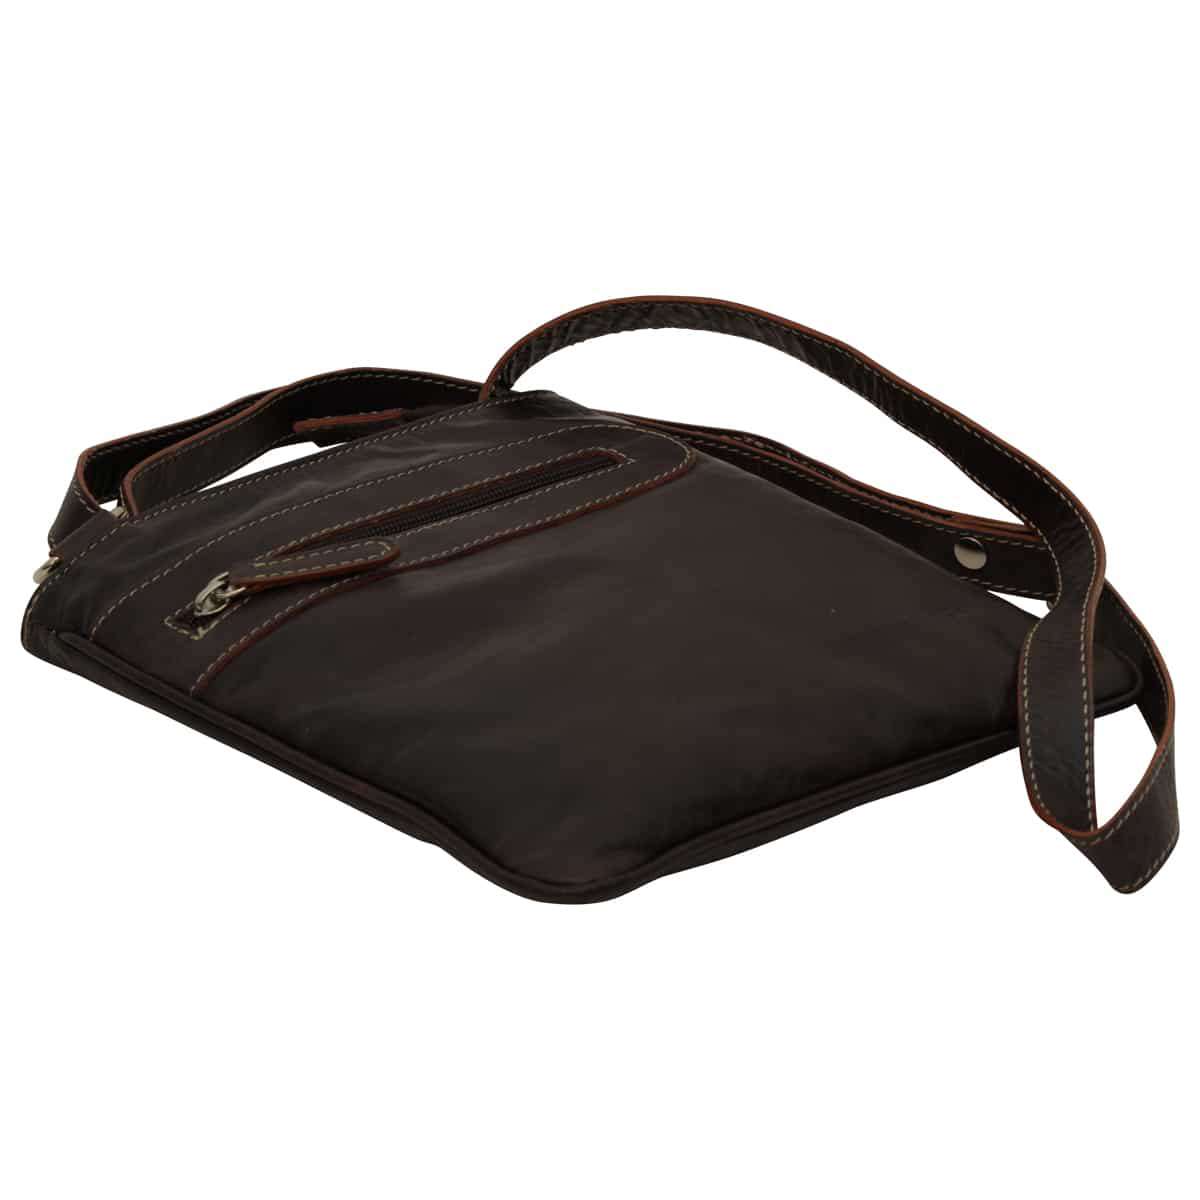 Leather cross body bag with zip pocket - Dark Brown | 086161TM UK | Old Angler Firenze